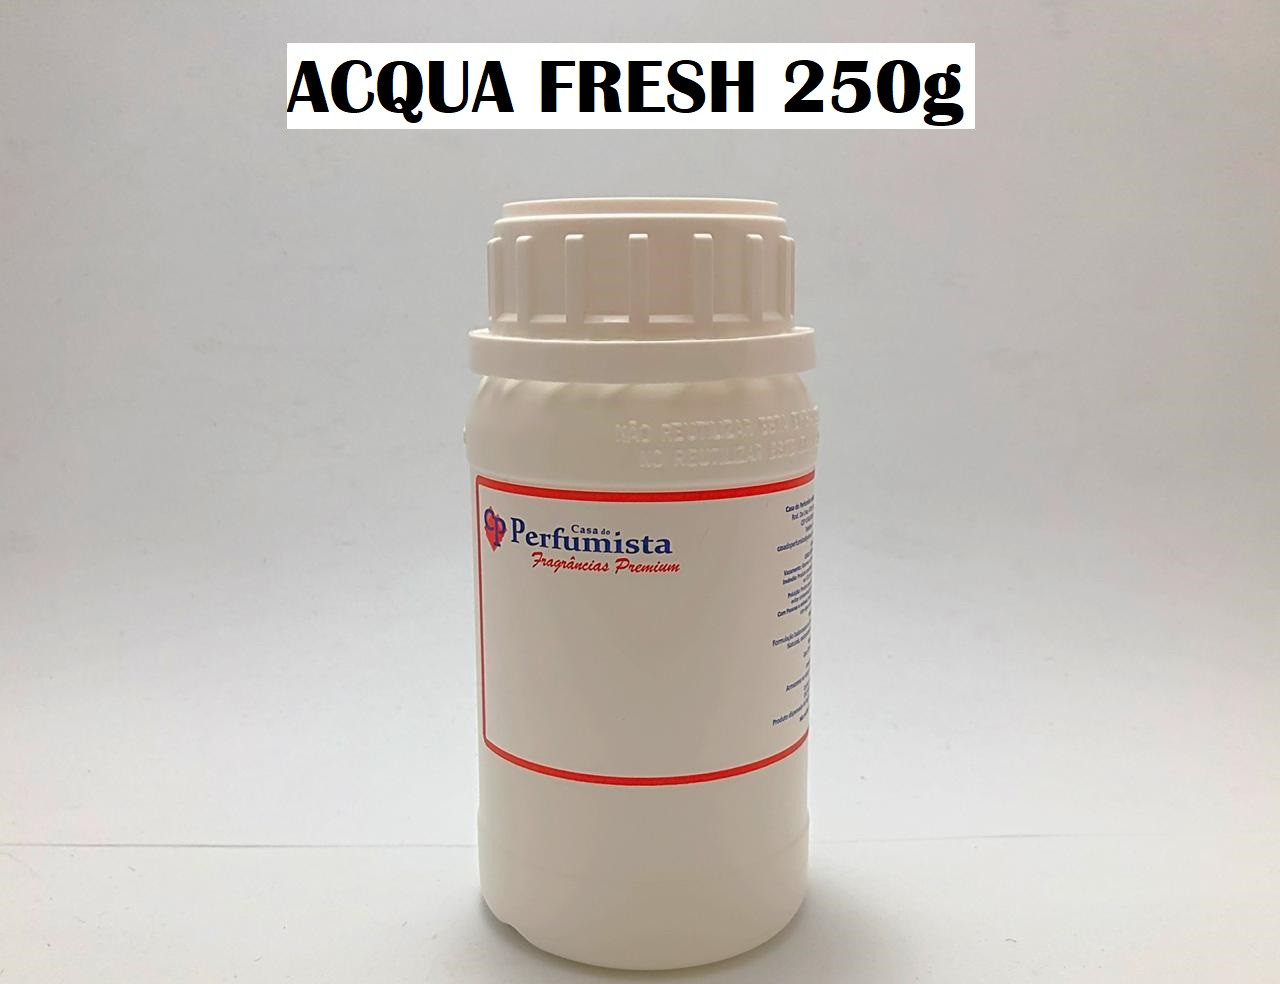 ACQUA FRESH - 250g